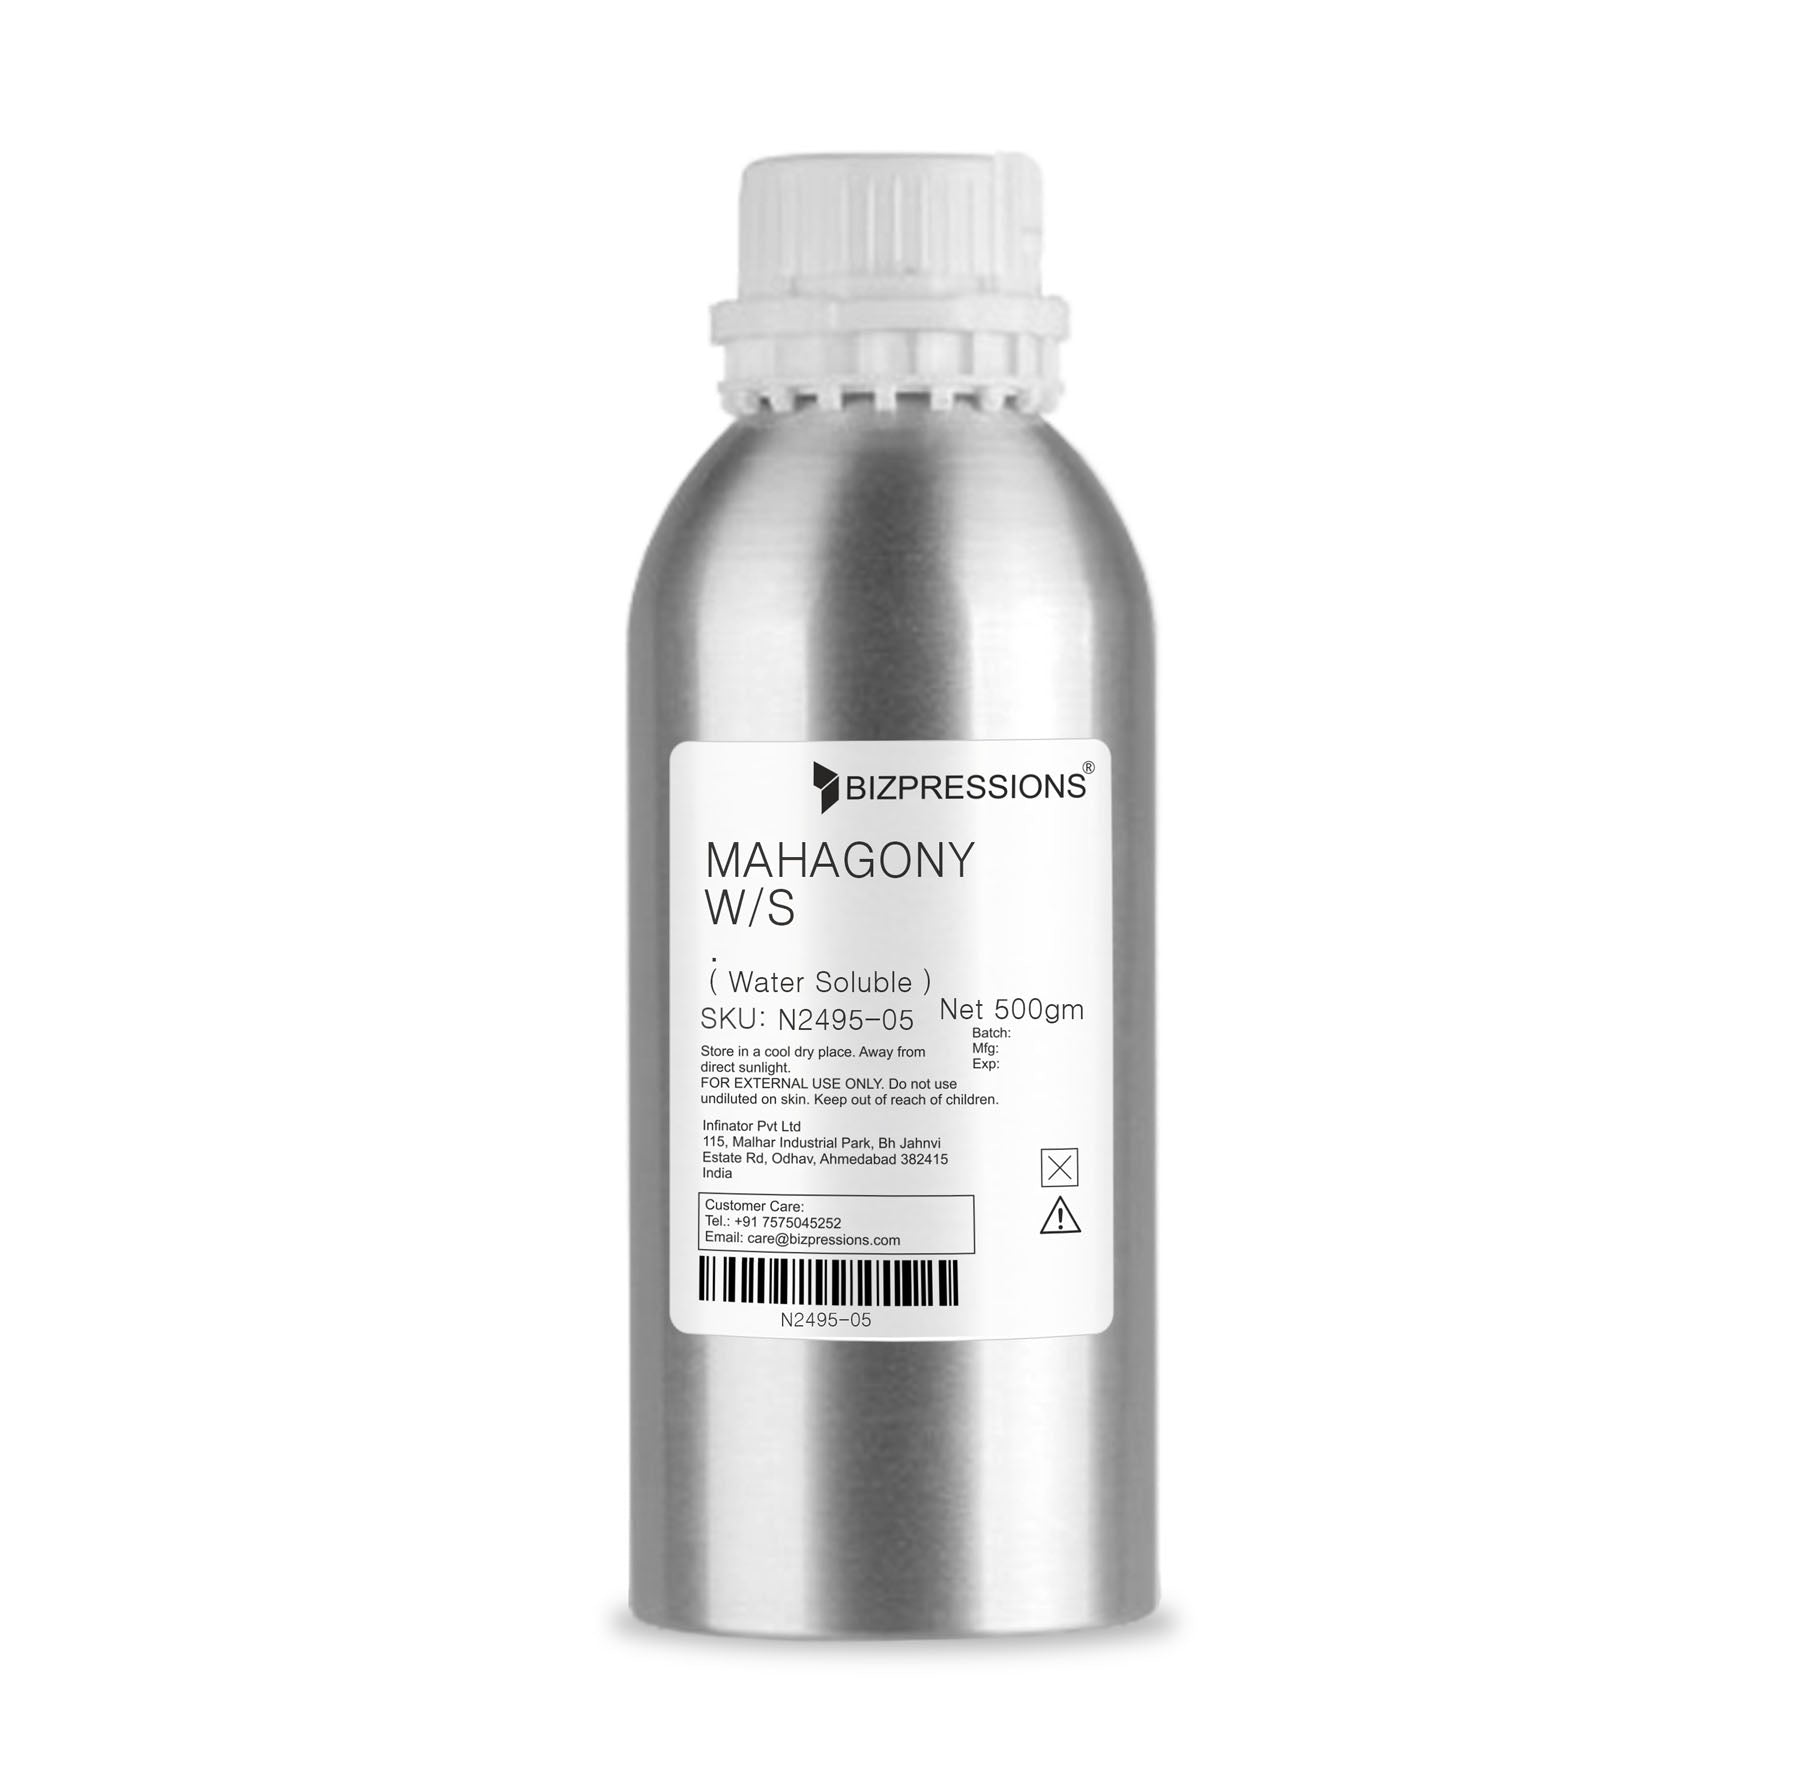 MAHAGONY W/S - Fragrance ( Water Soluble ) - 500 gm